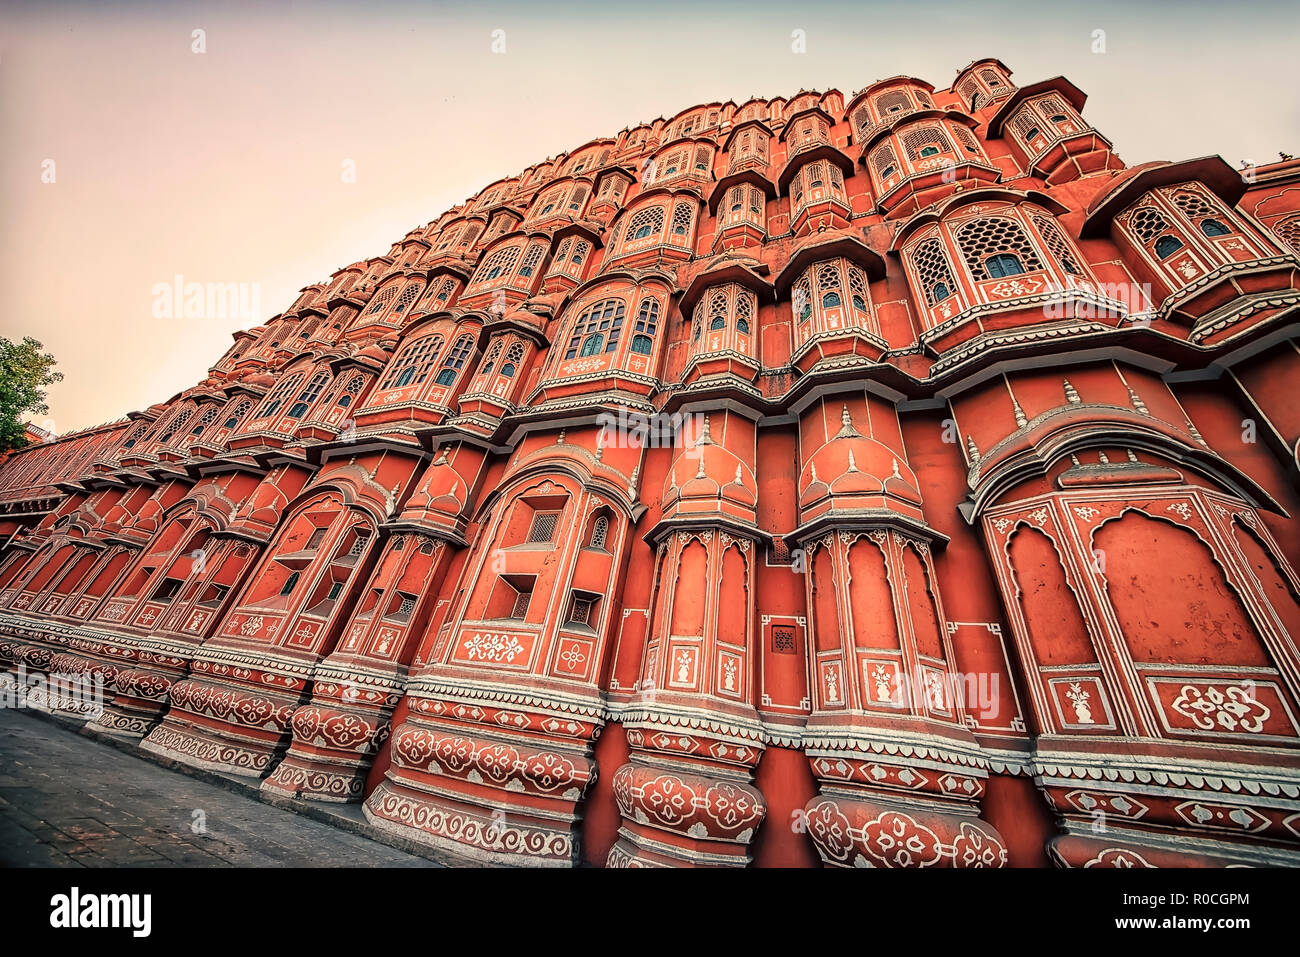 Hawa Mahal - Palace of Winds, Jaipur, India. Stock Photo